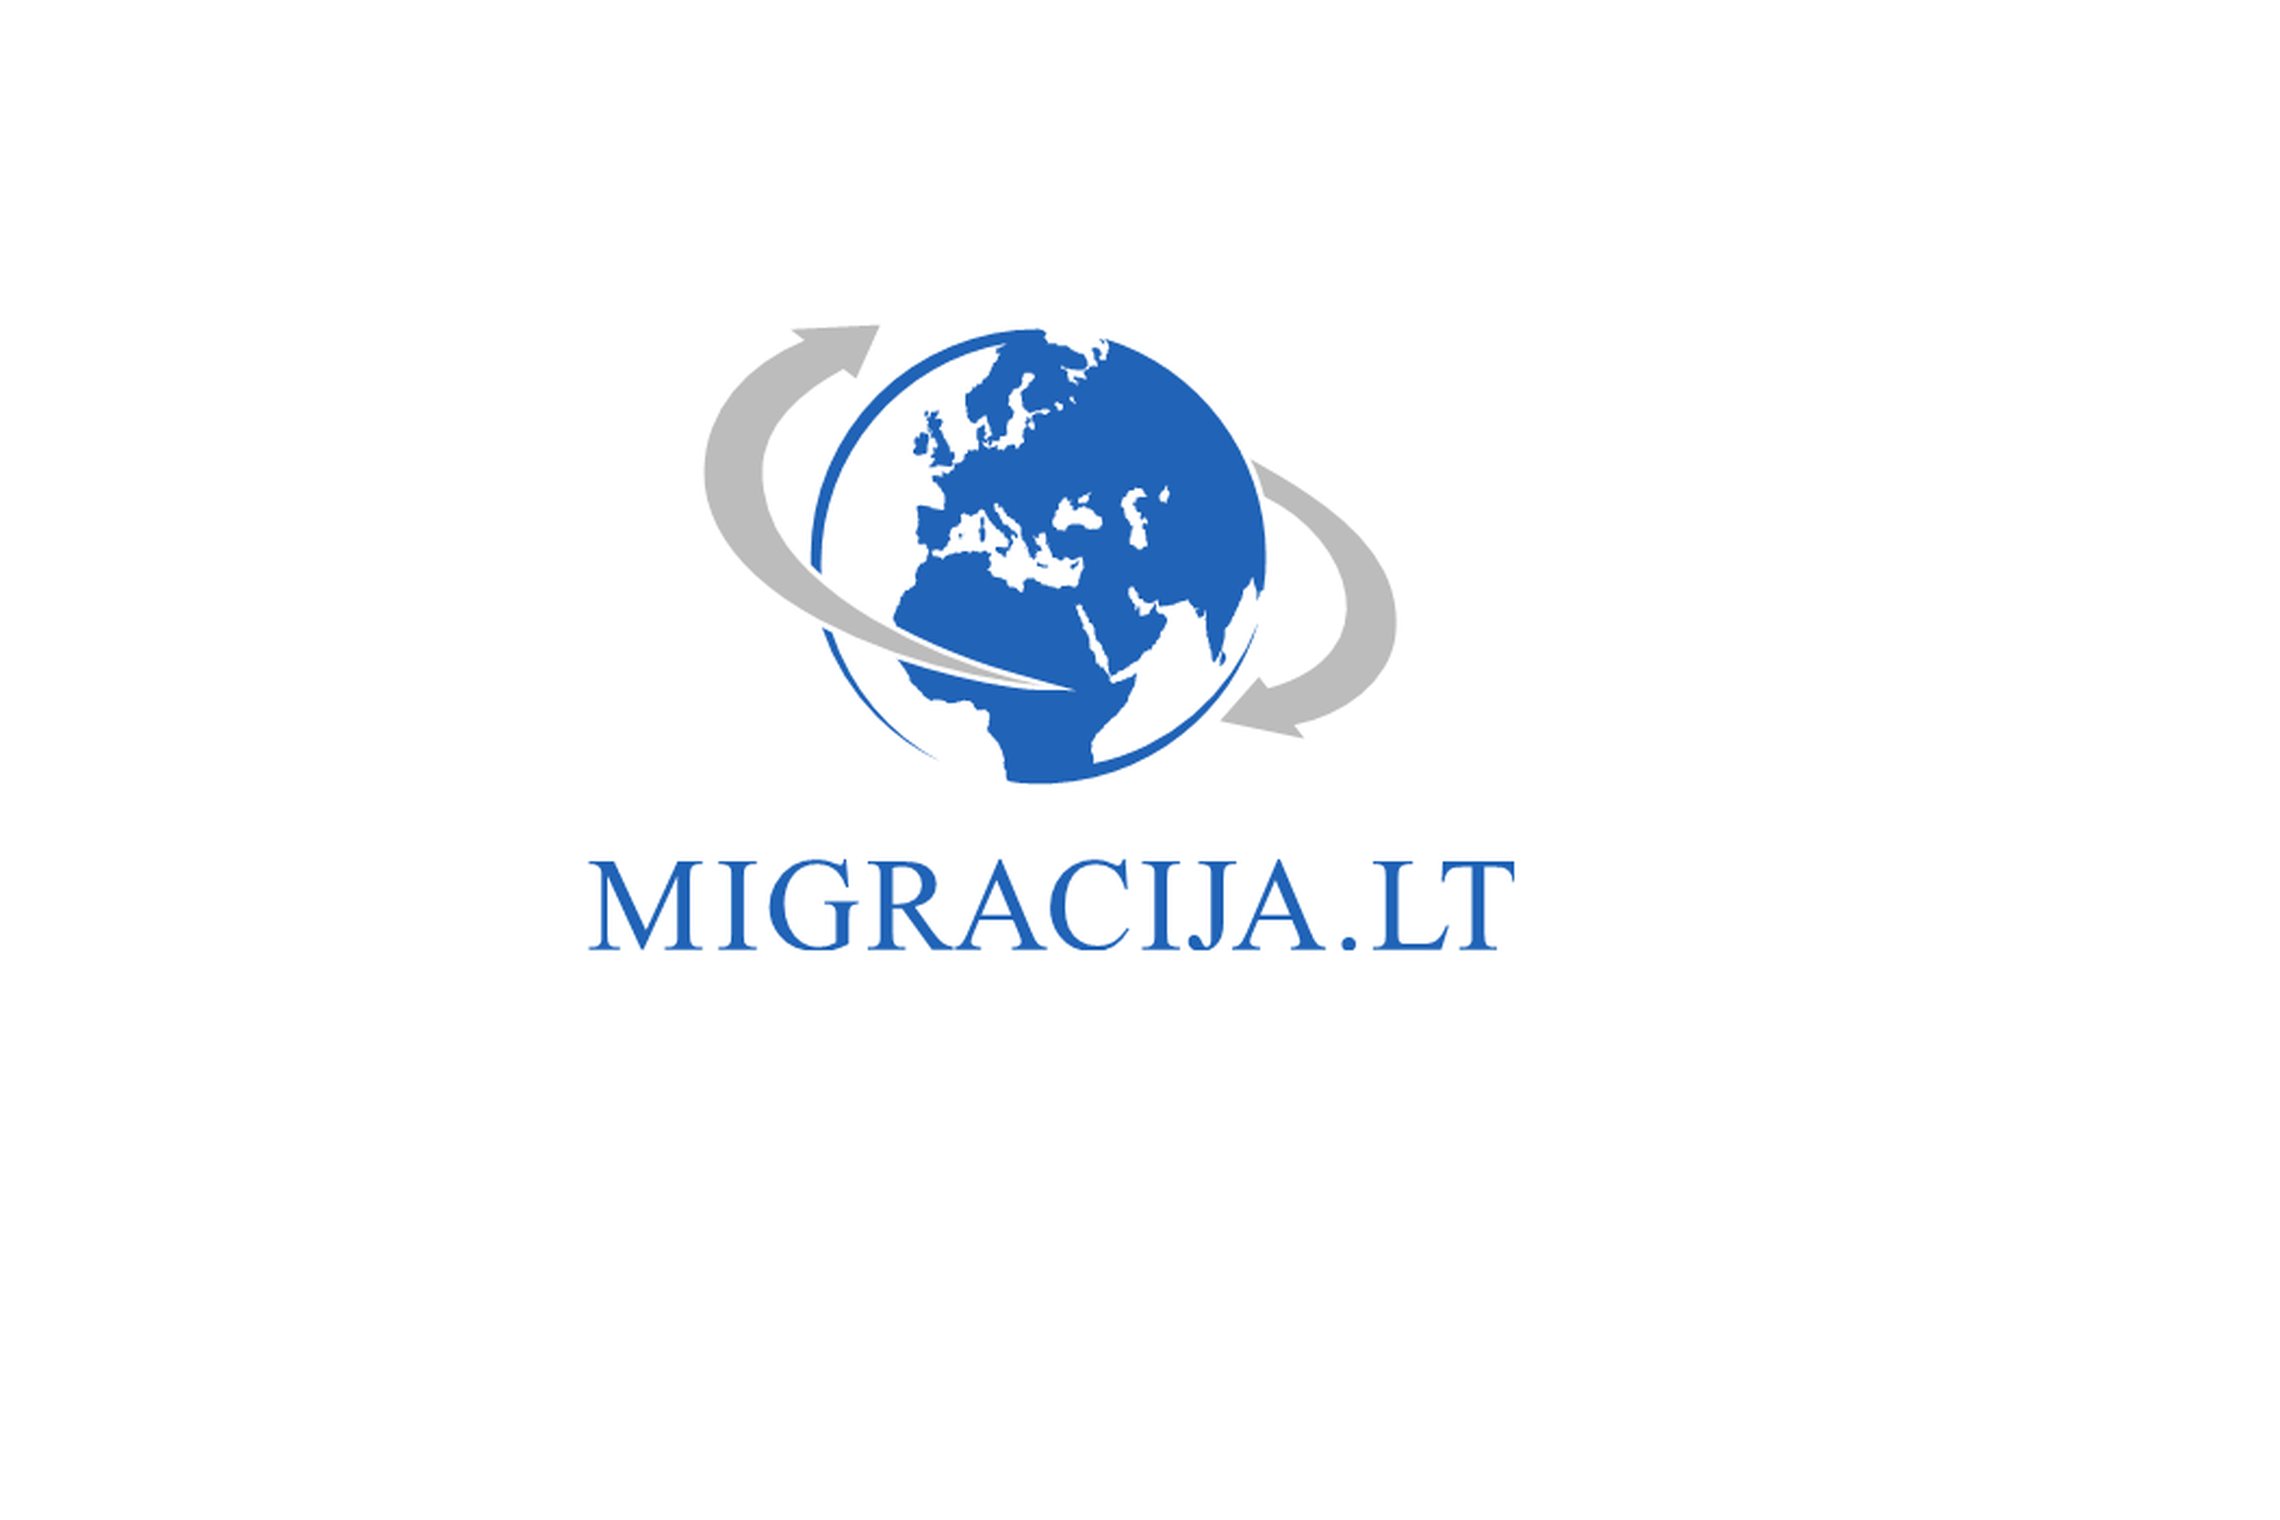 migracija.lt logo